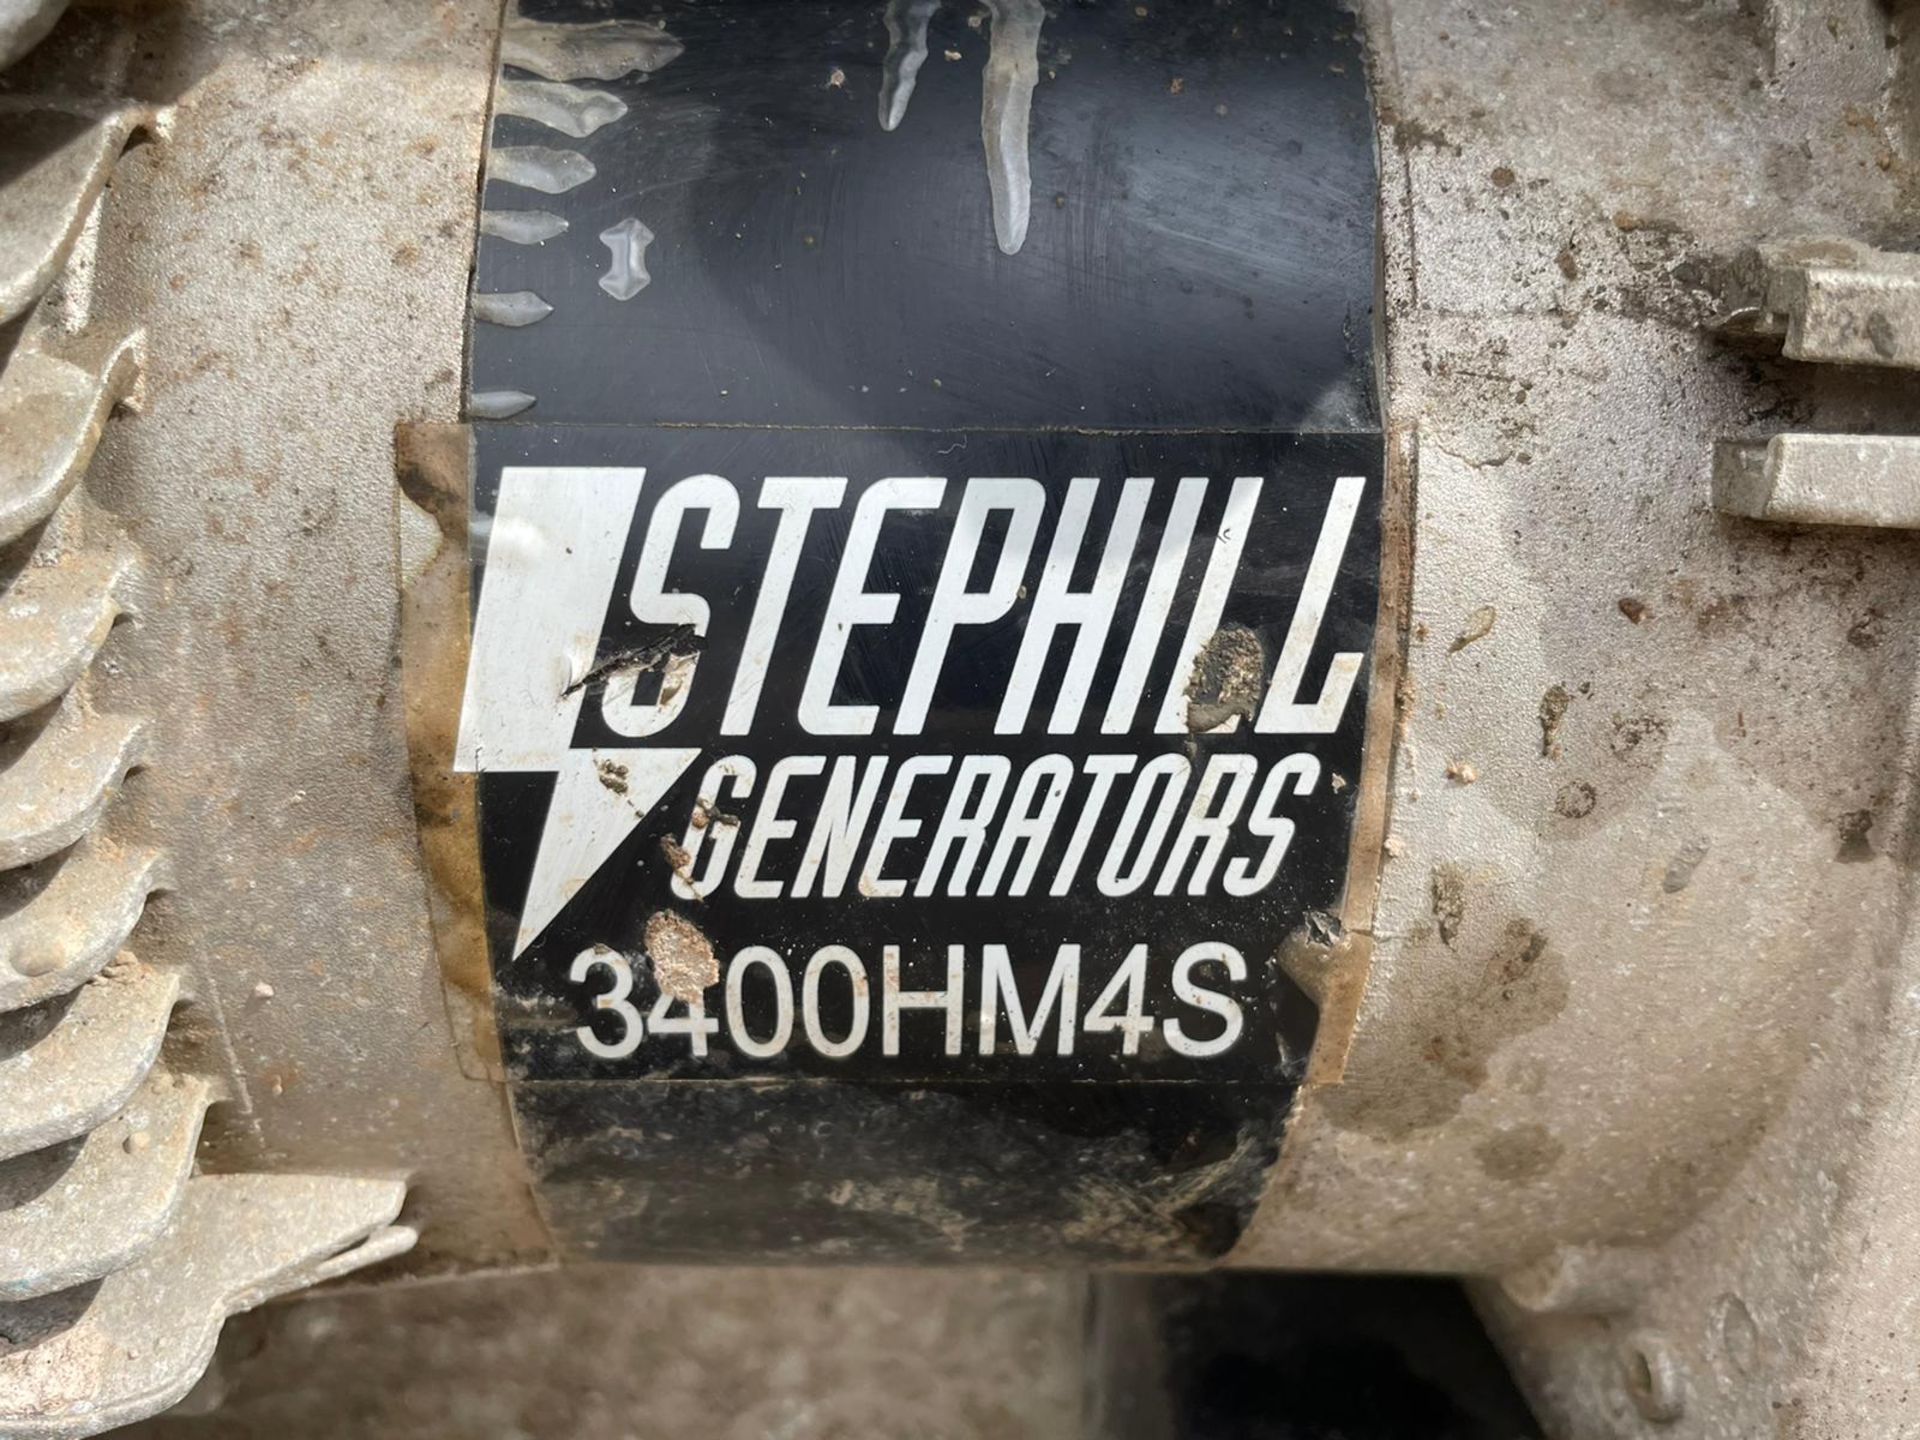 2015 STEPHILL 3400HM4S GENERATOR 3.4KVA, 115 AND 230 VOLTS, HONDA PETROL ENGINE, RUNS *NO VAT* - Image 4 of 4